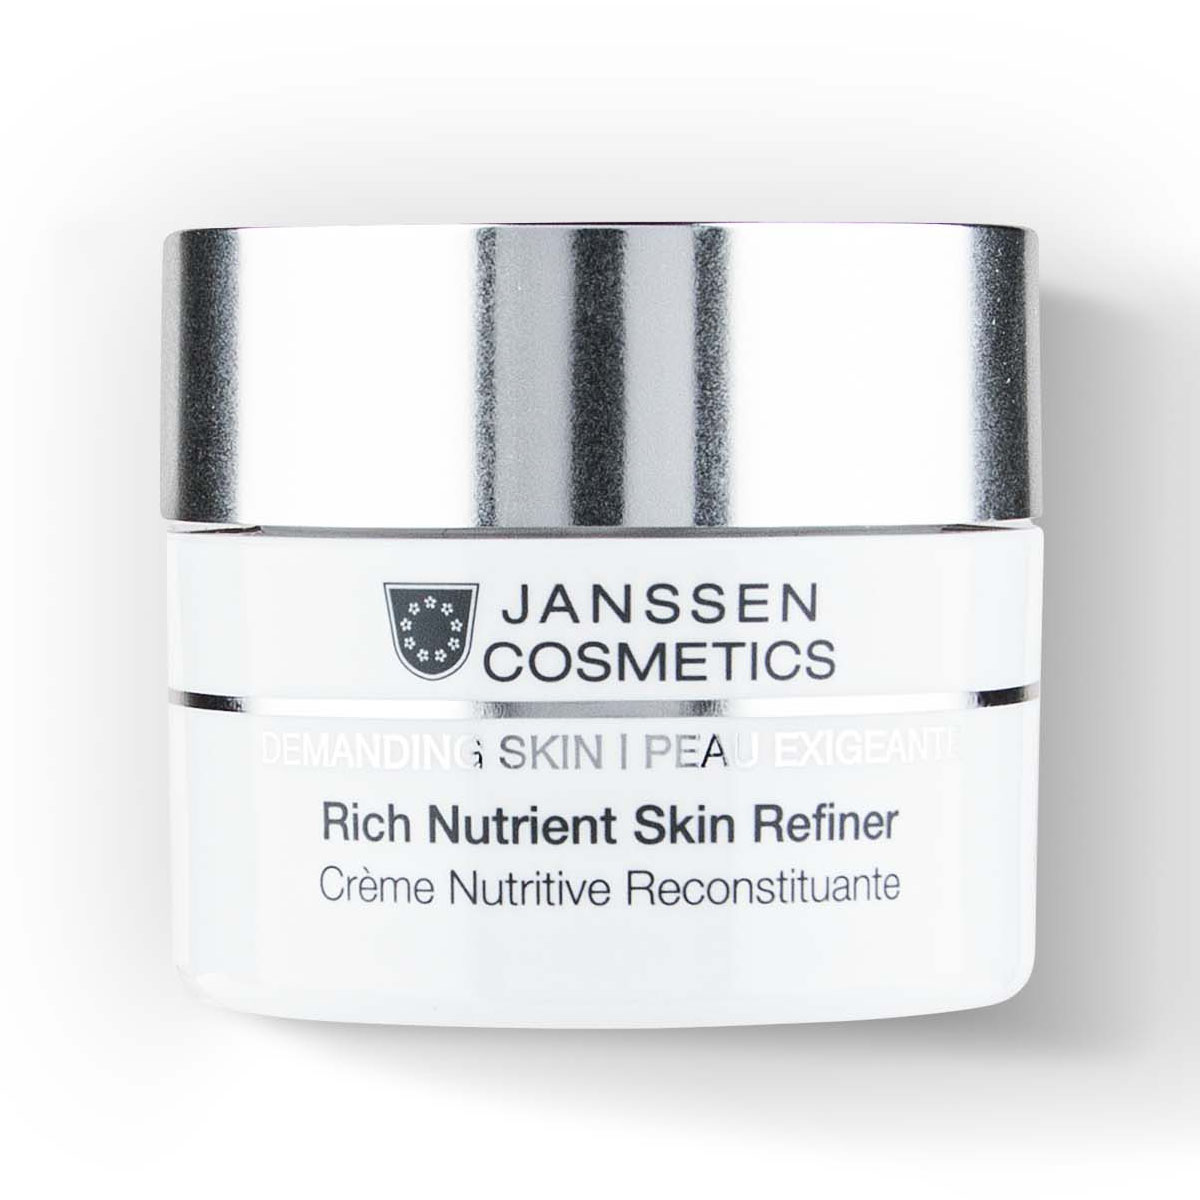 Janssen Cosmetics Обогащенный дневной питательный крем Rich Nutrient Skin Refiner SPF 15, 50 мл (Janssen Cosmetics, Demanding skin)